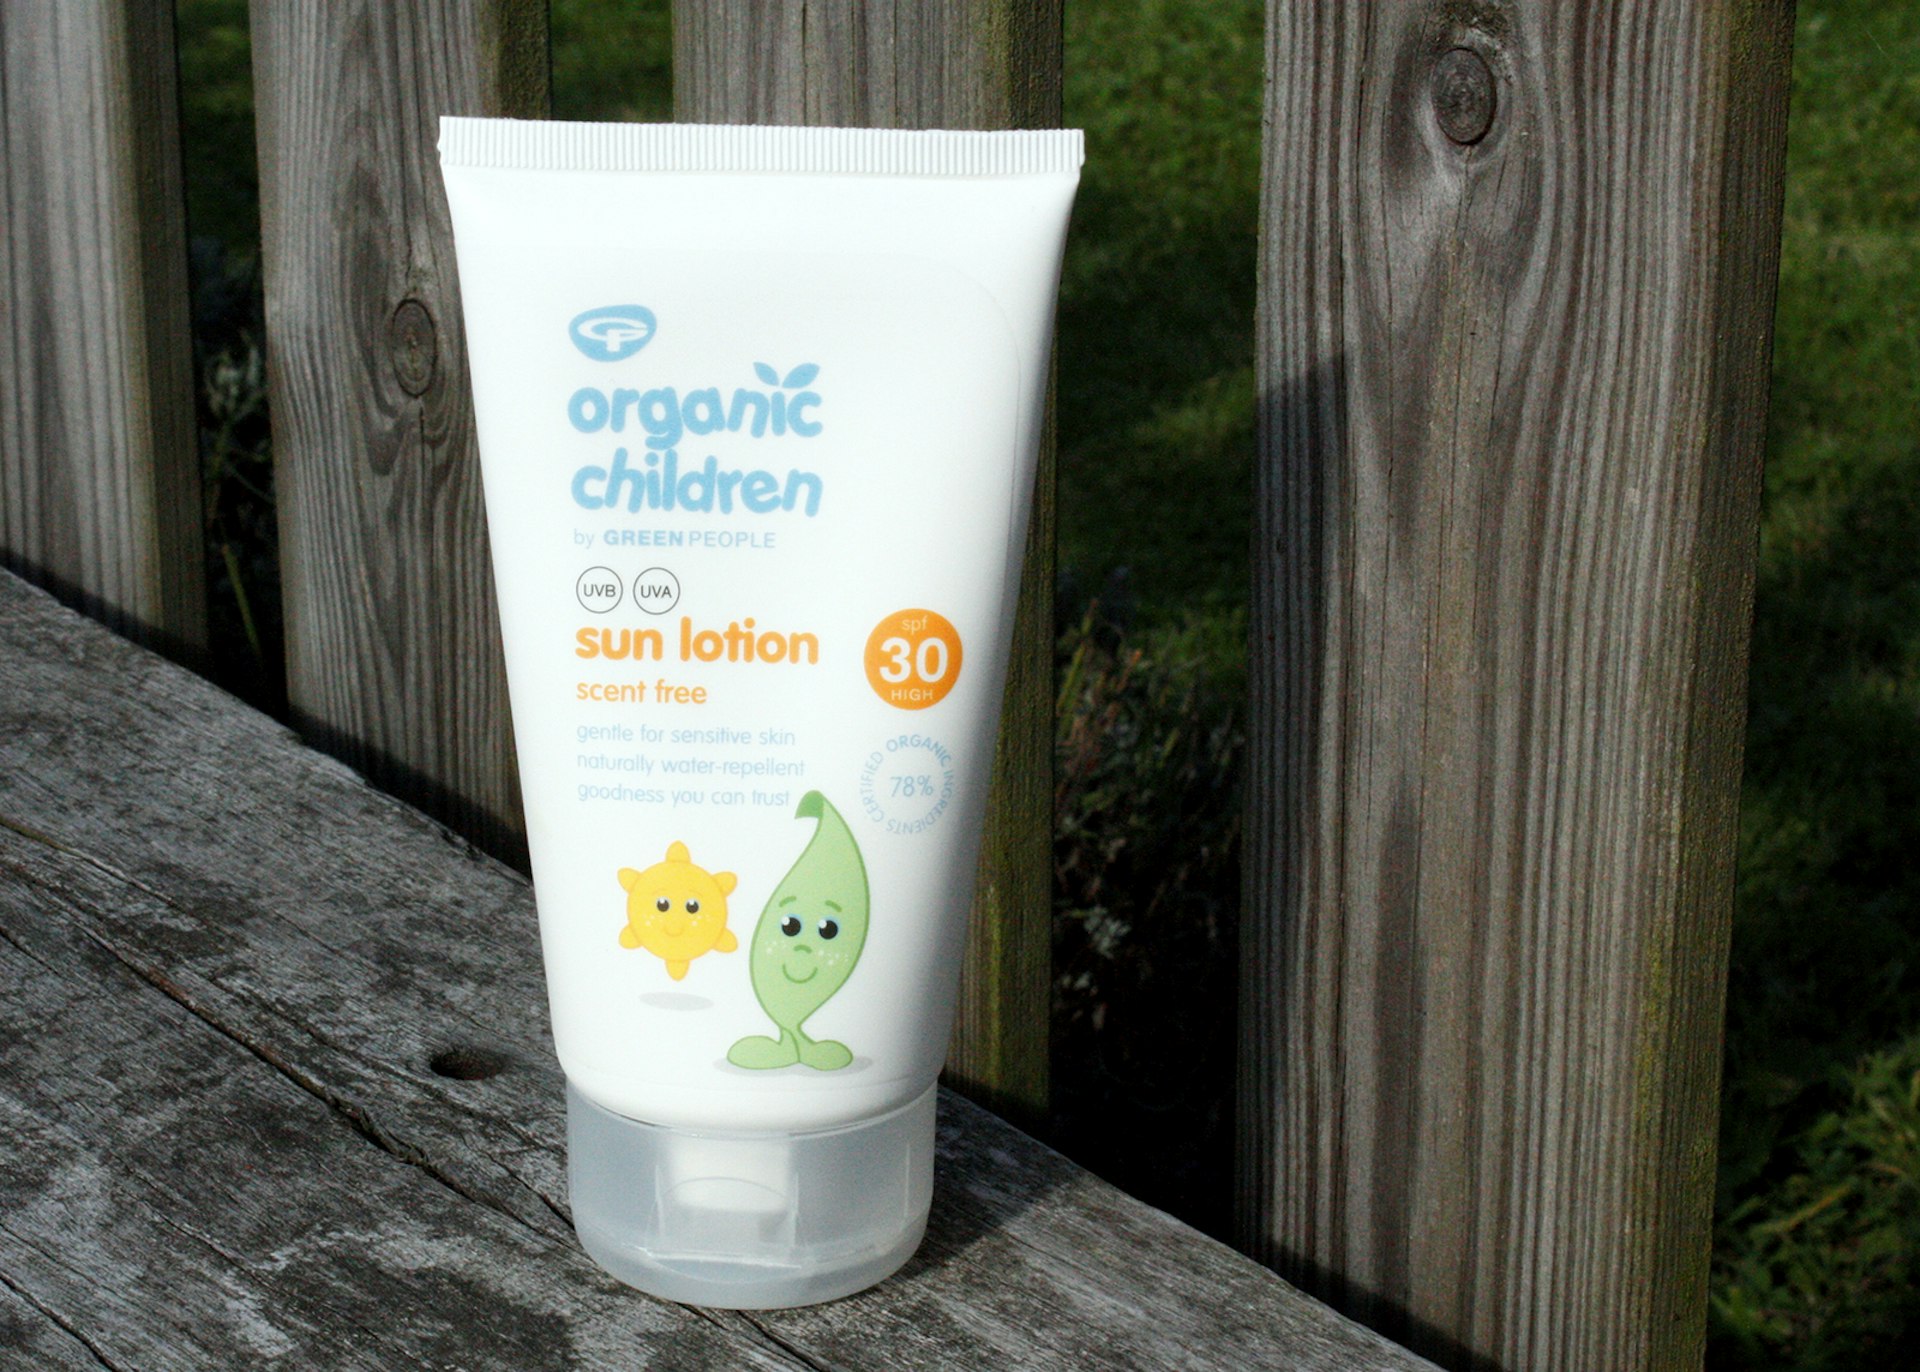 Organic Children sun lotion © David Else / Lonely Planet